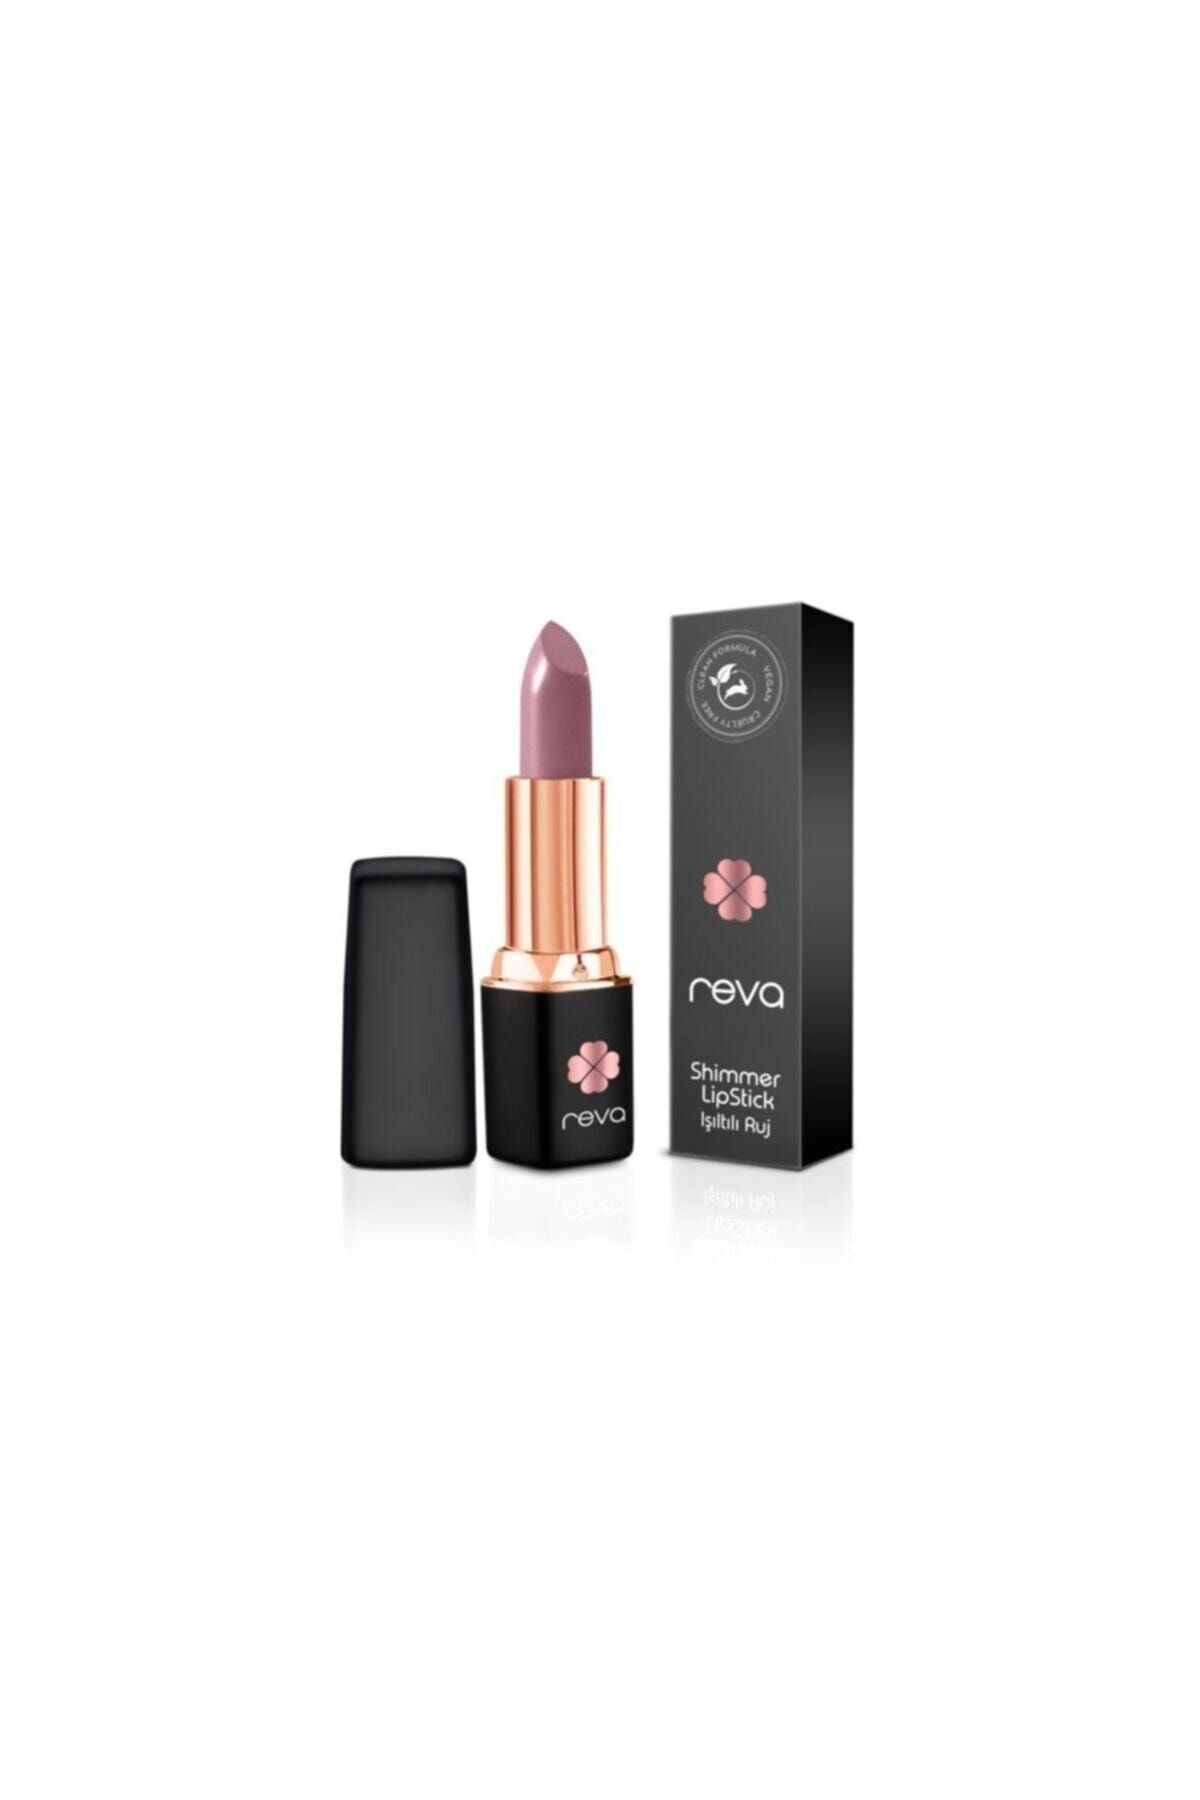 REVA Işıltı Ruj - Shimmer Lipstick Lilas - No: 906 - Vegan  Temiz Içerik